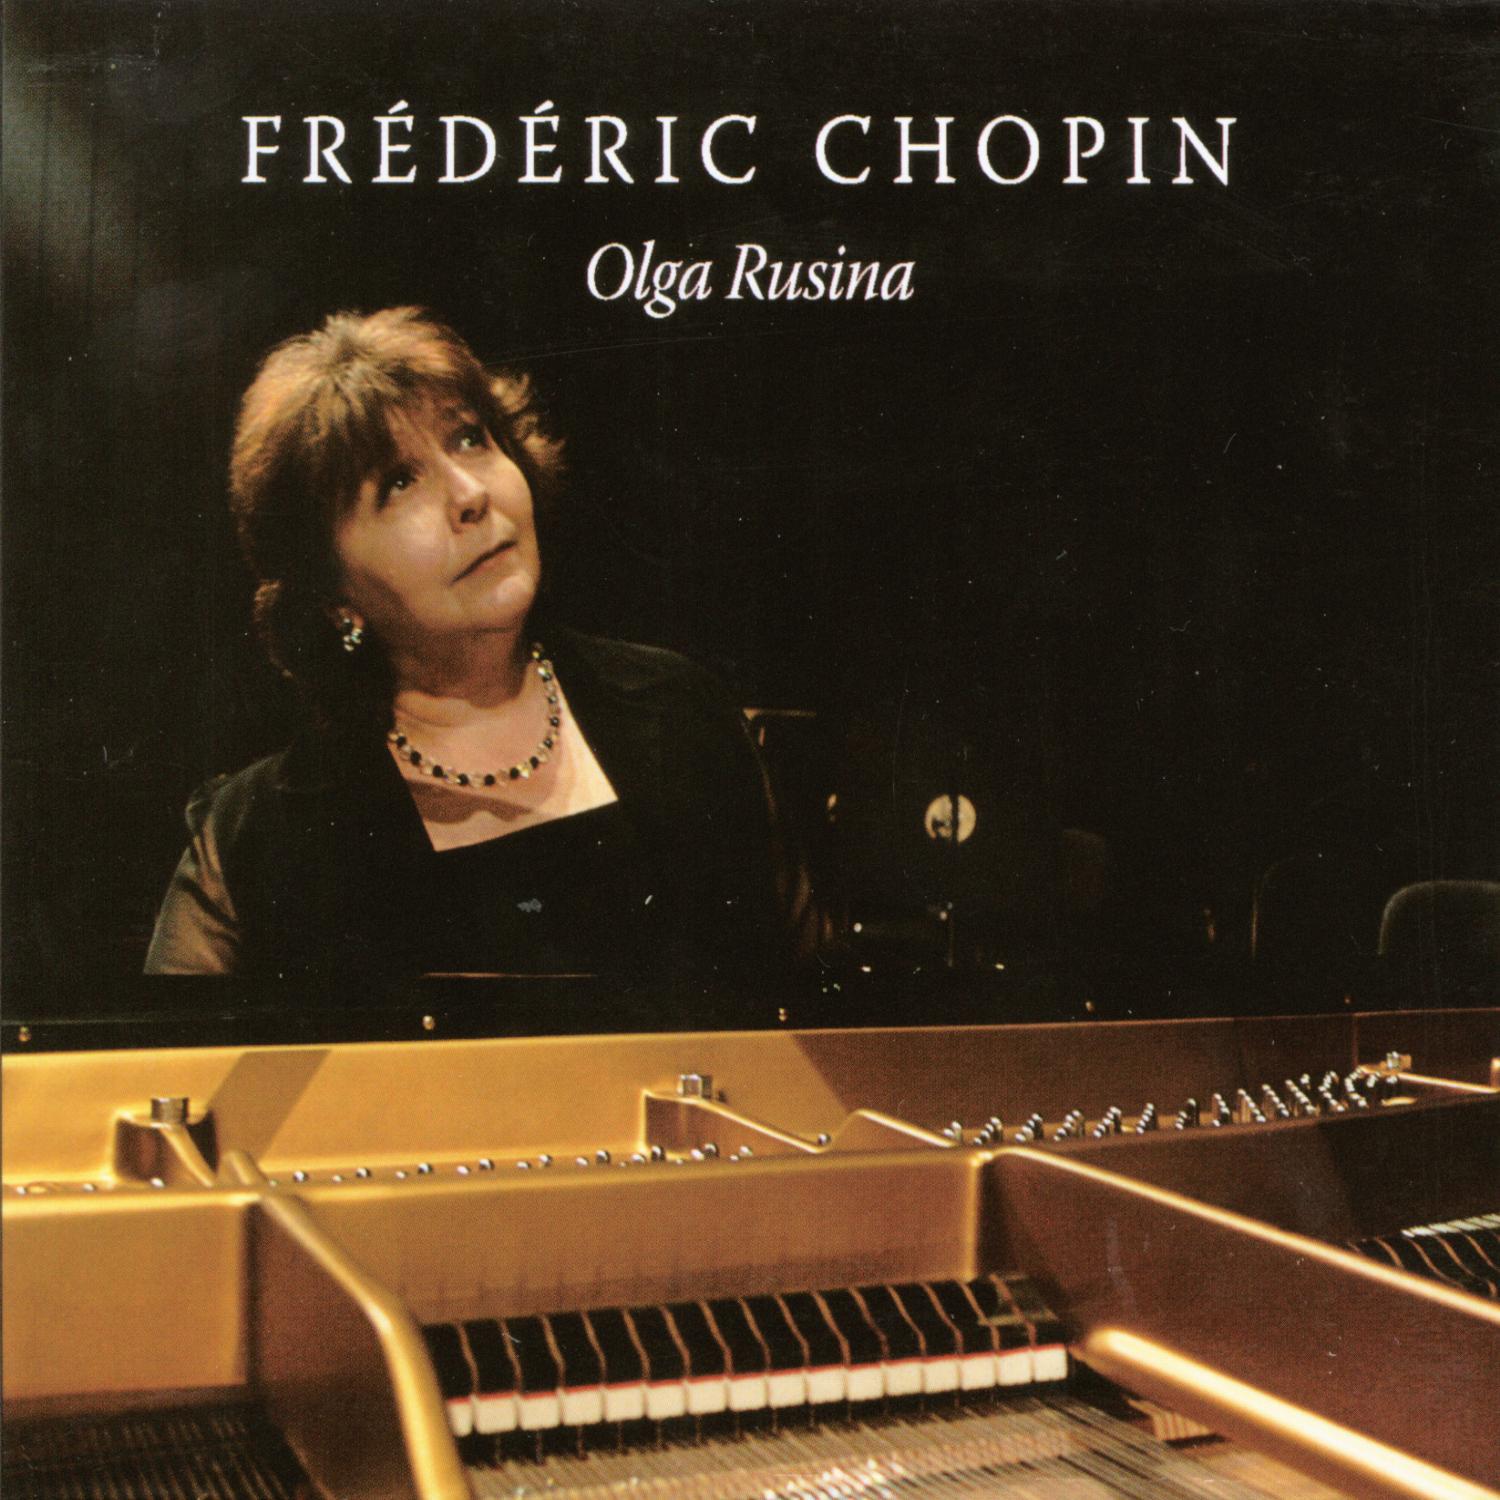 Piano Recital: Fre de ric Chopin